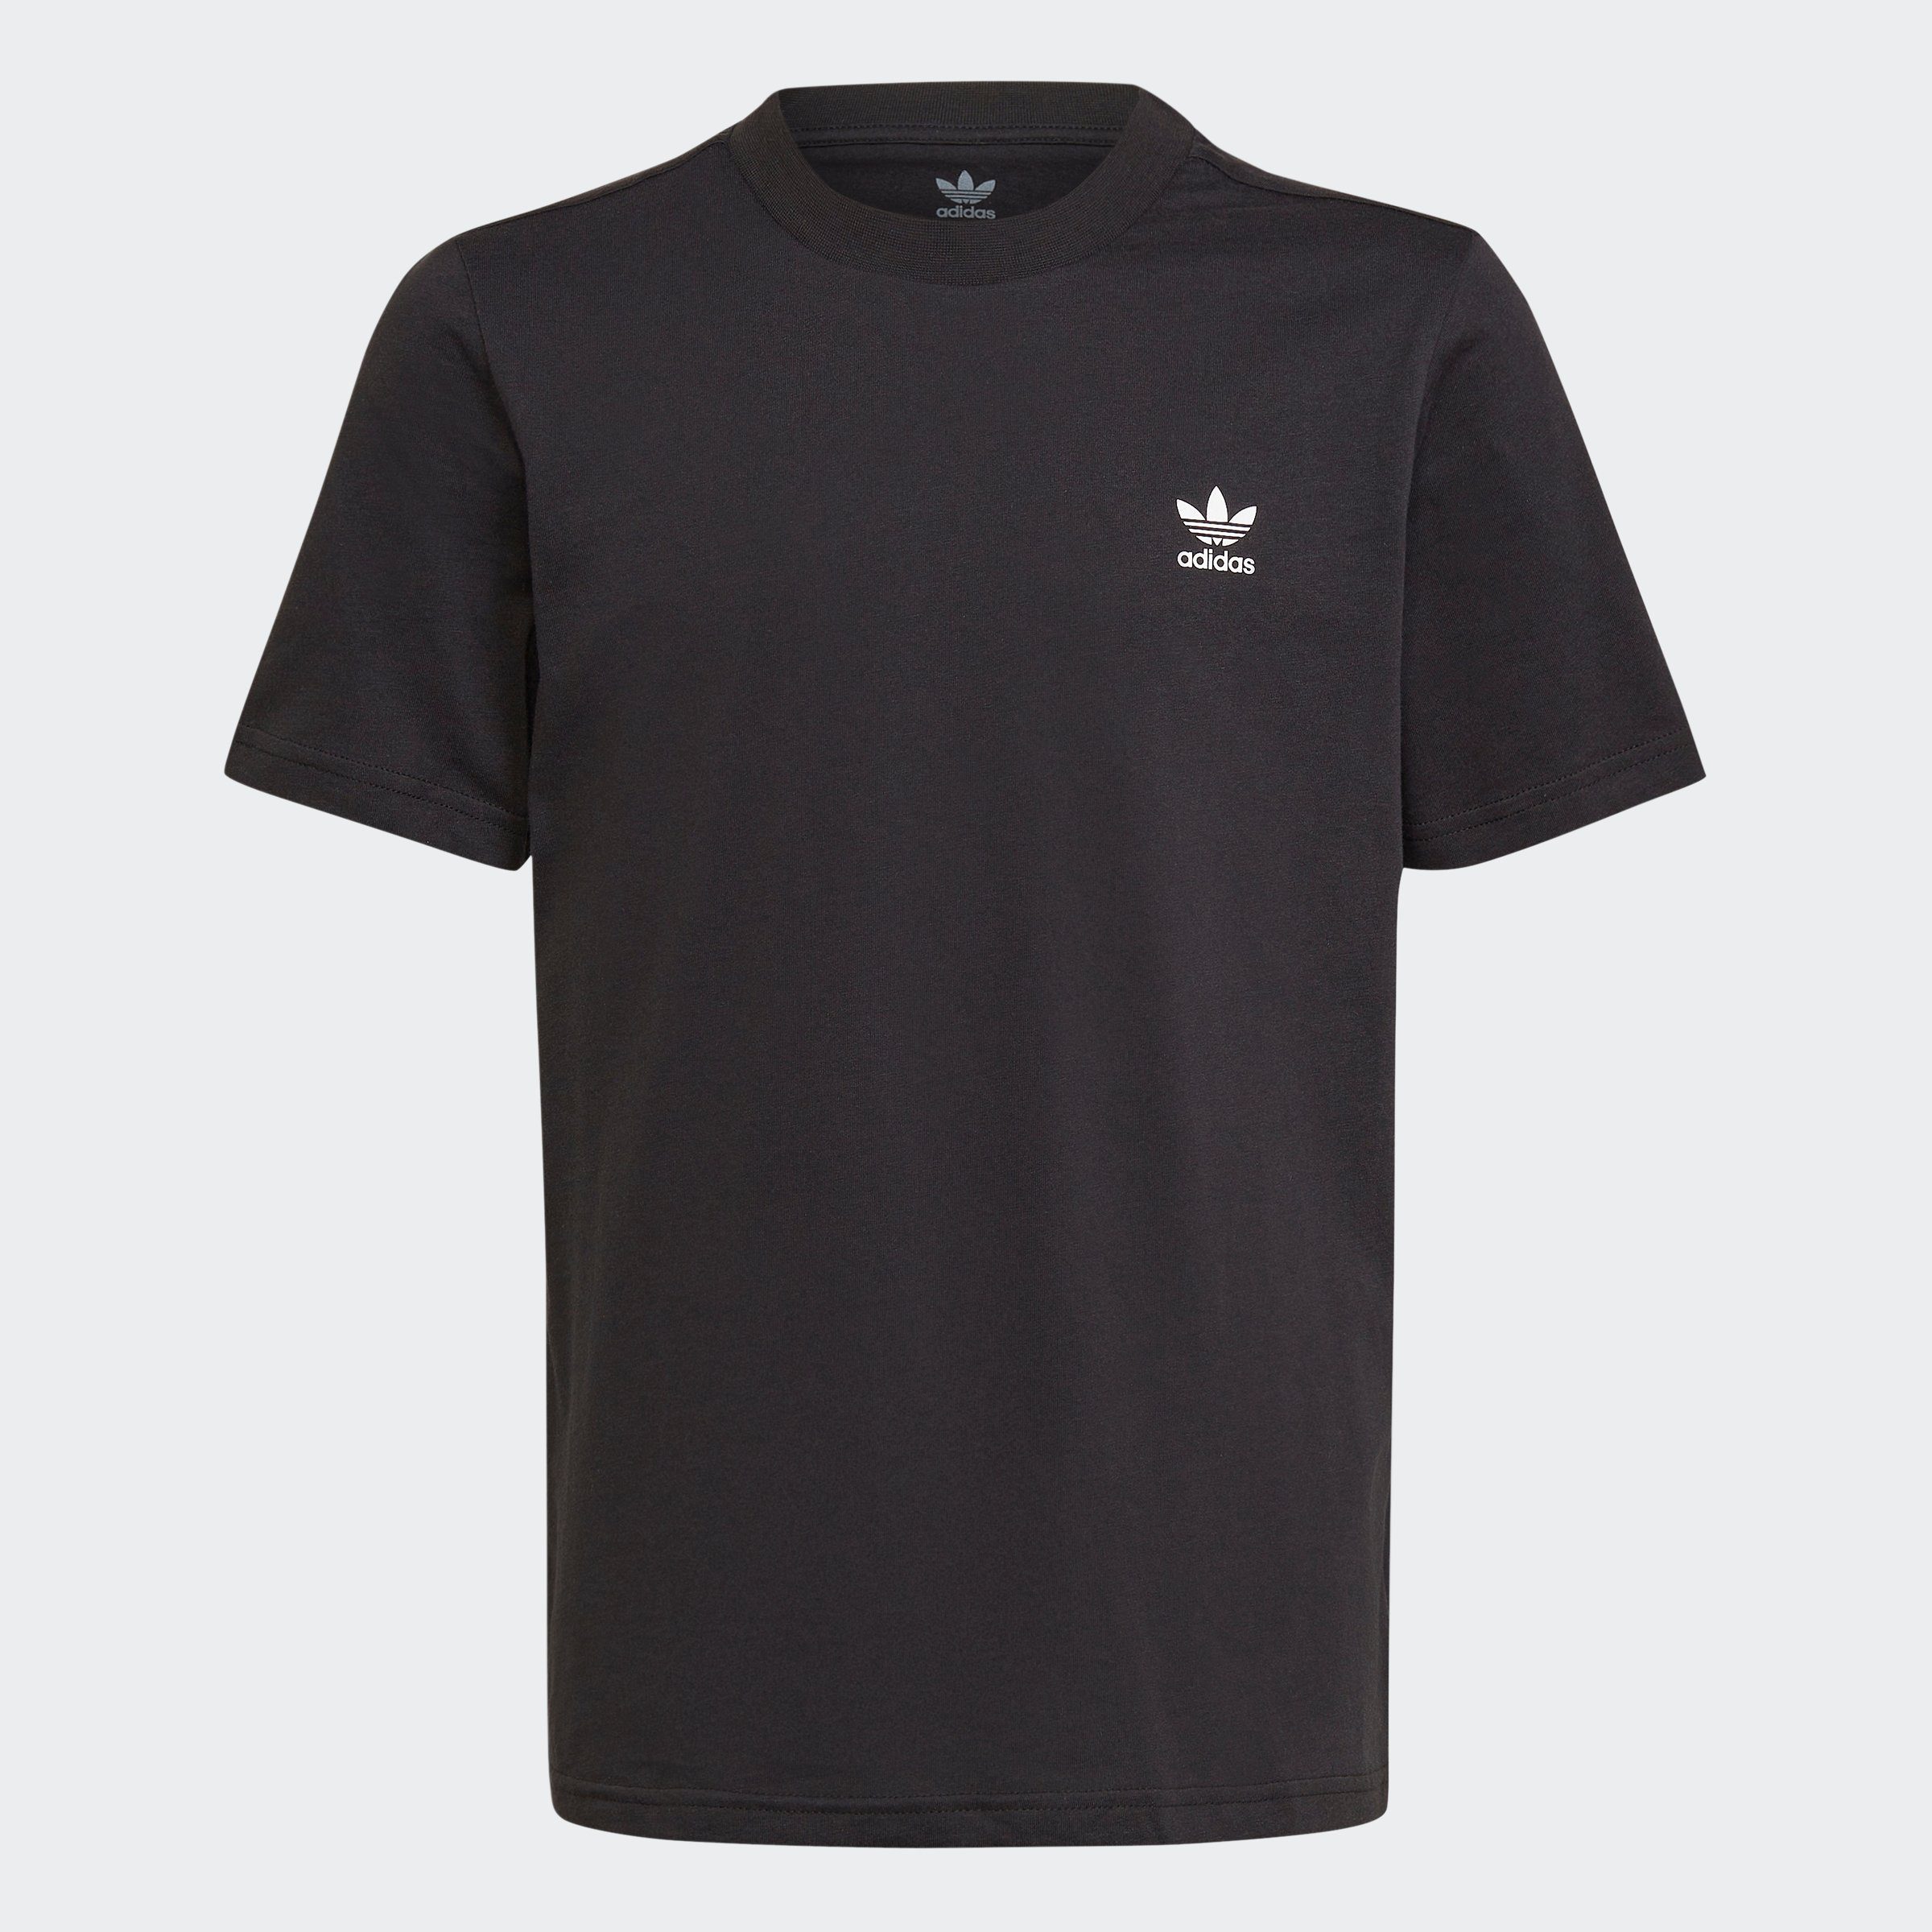 adidas Originals T-Shirt TEE Black